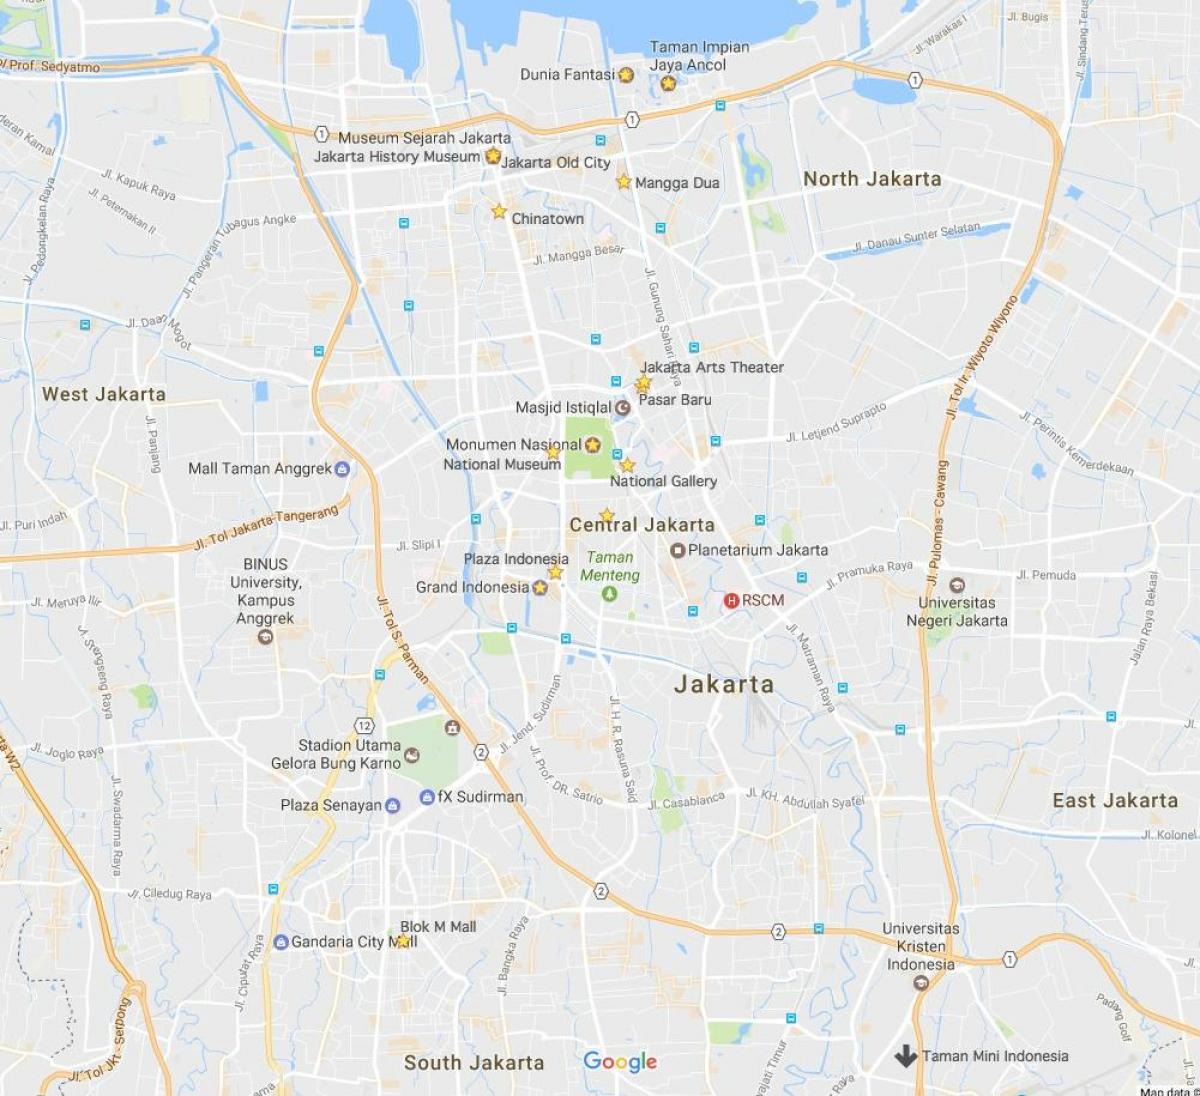 kort over Jakarta chinatown